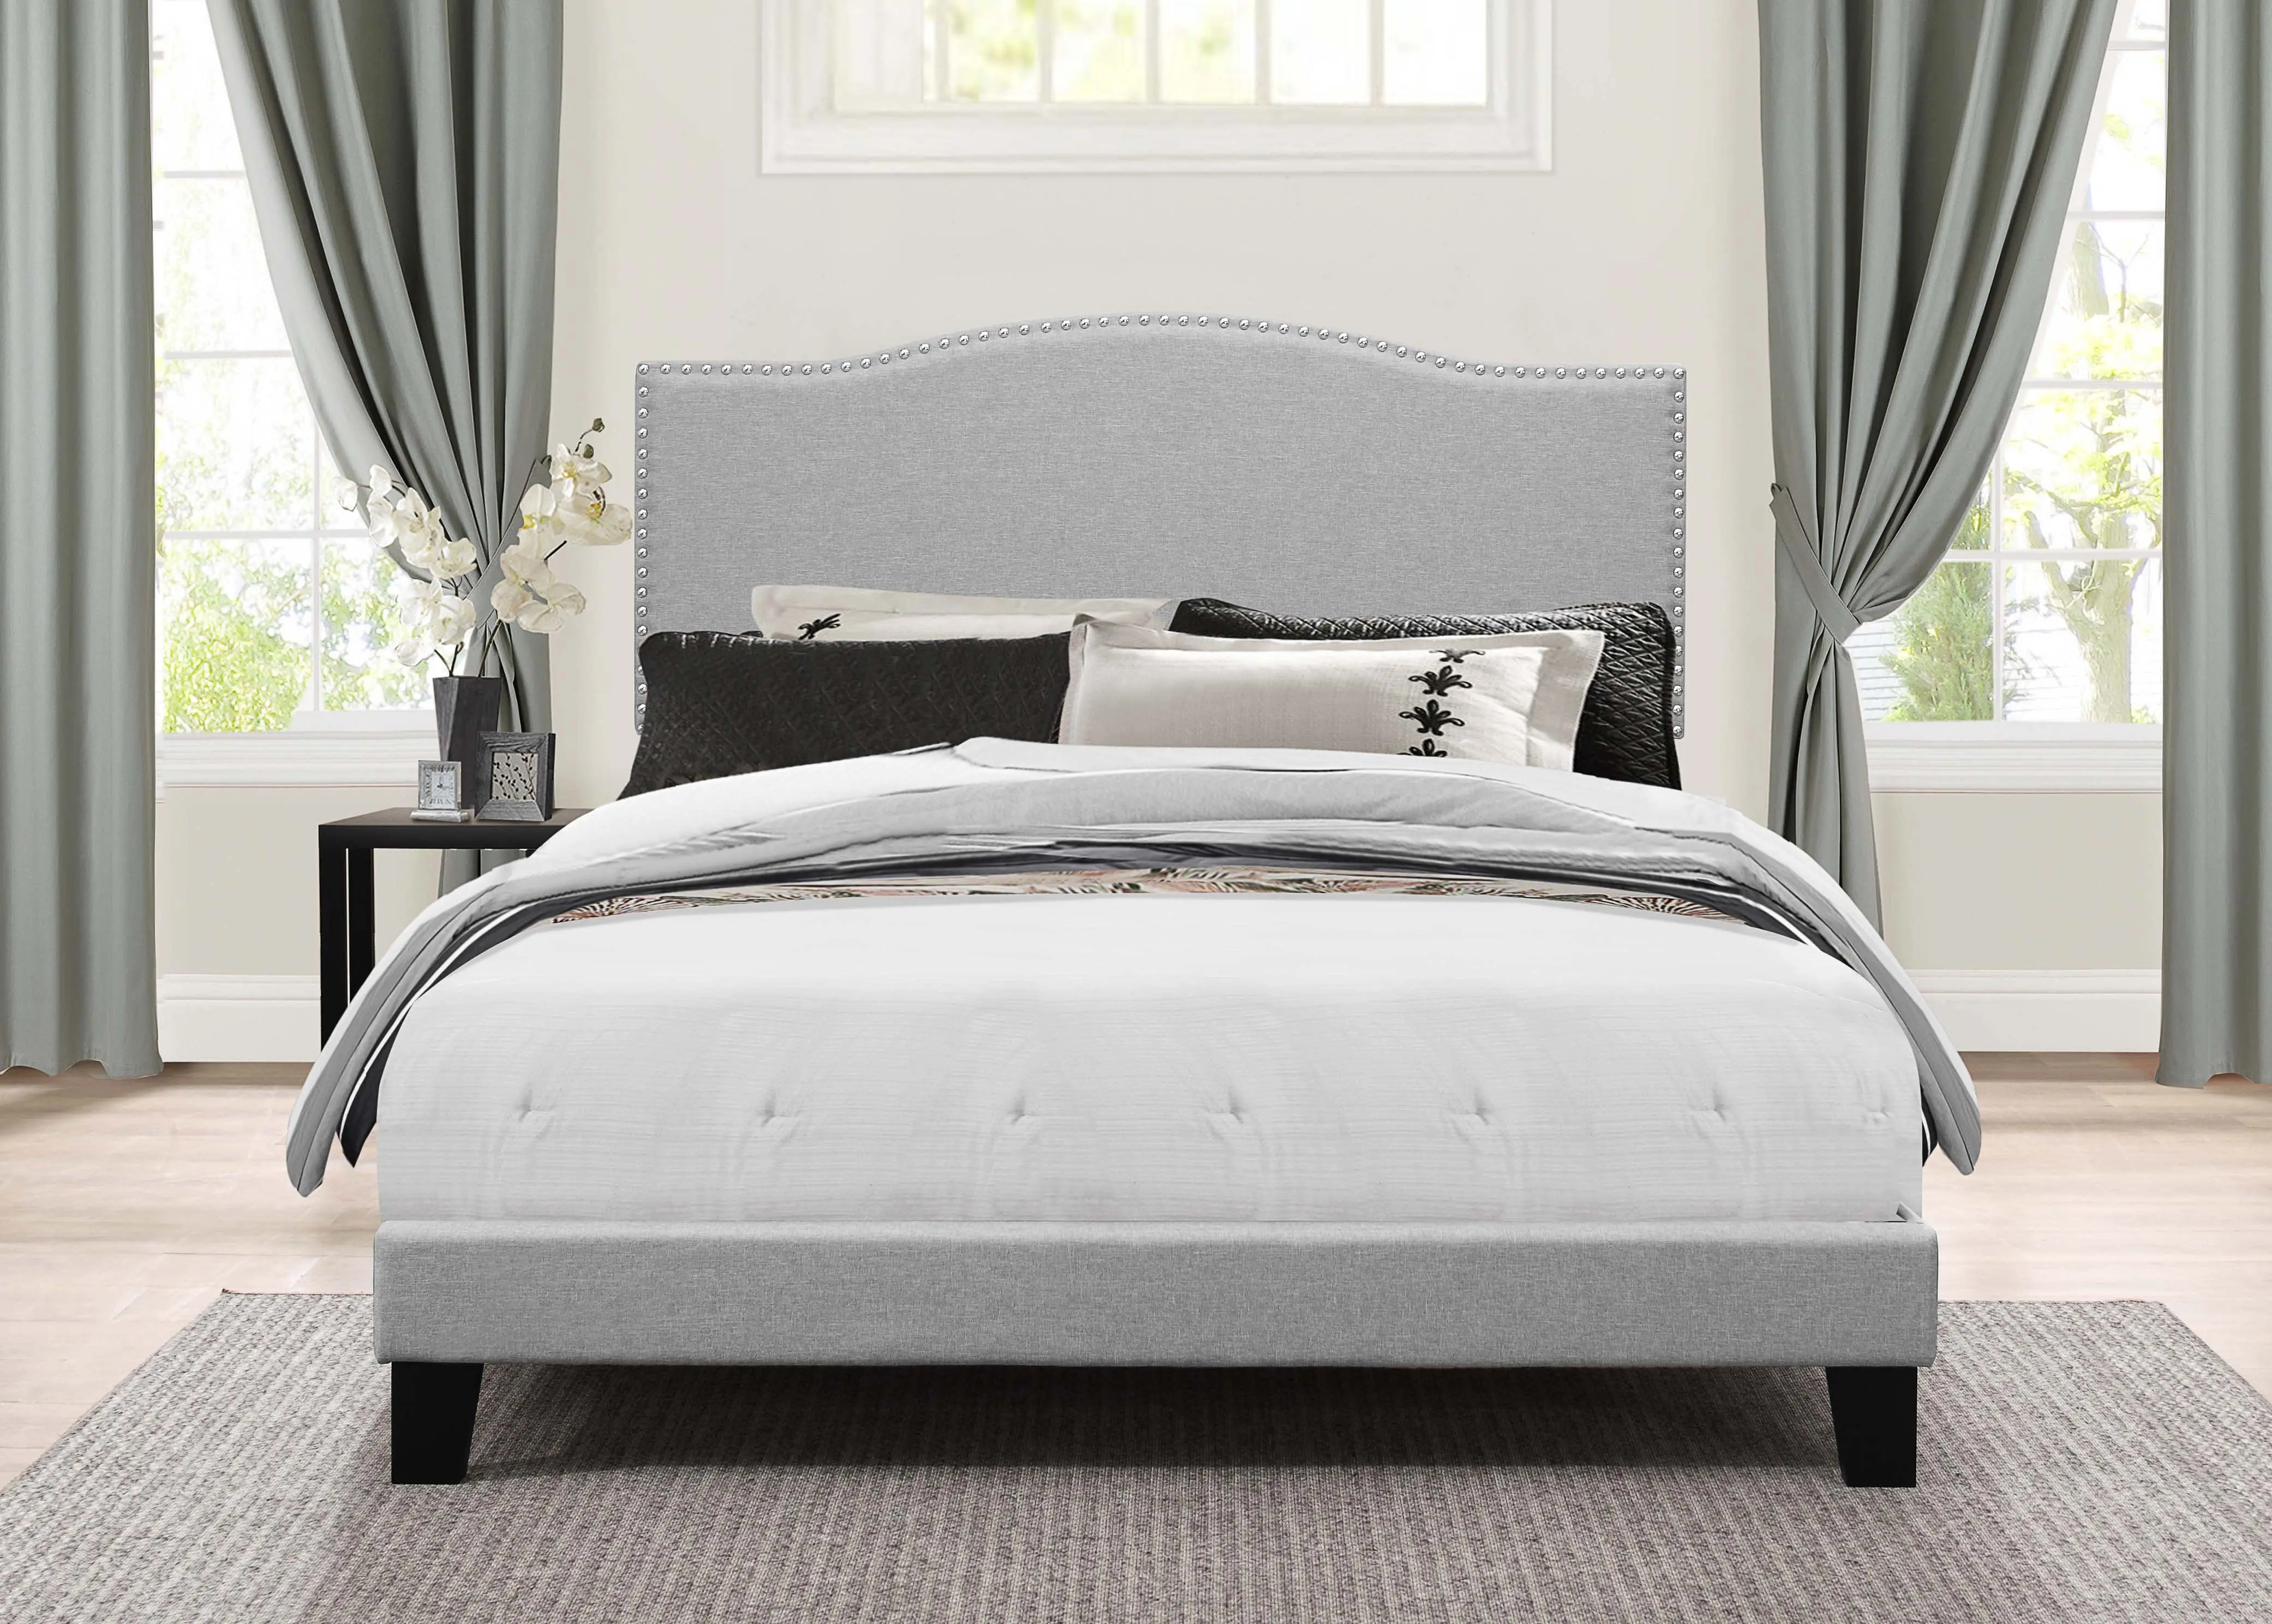 Kiley Glacier Gray Queen Upholstered Bed